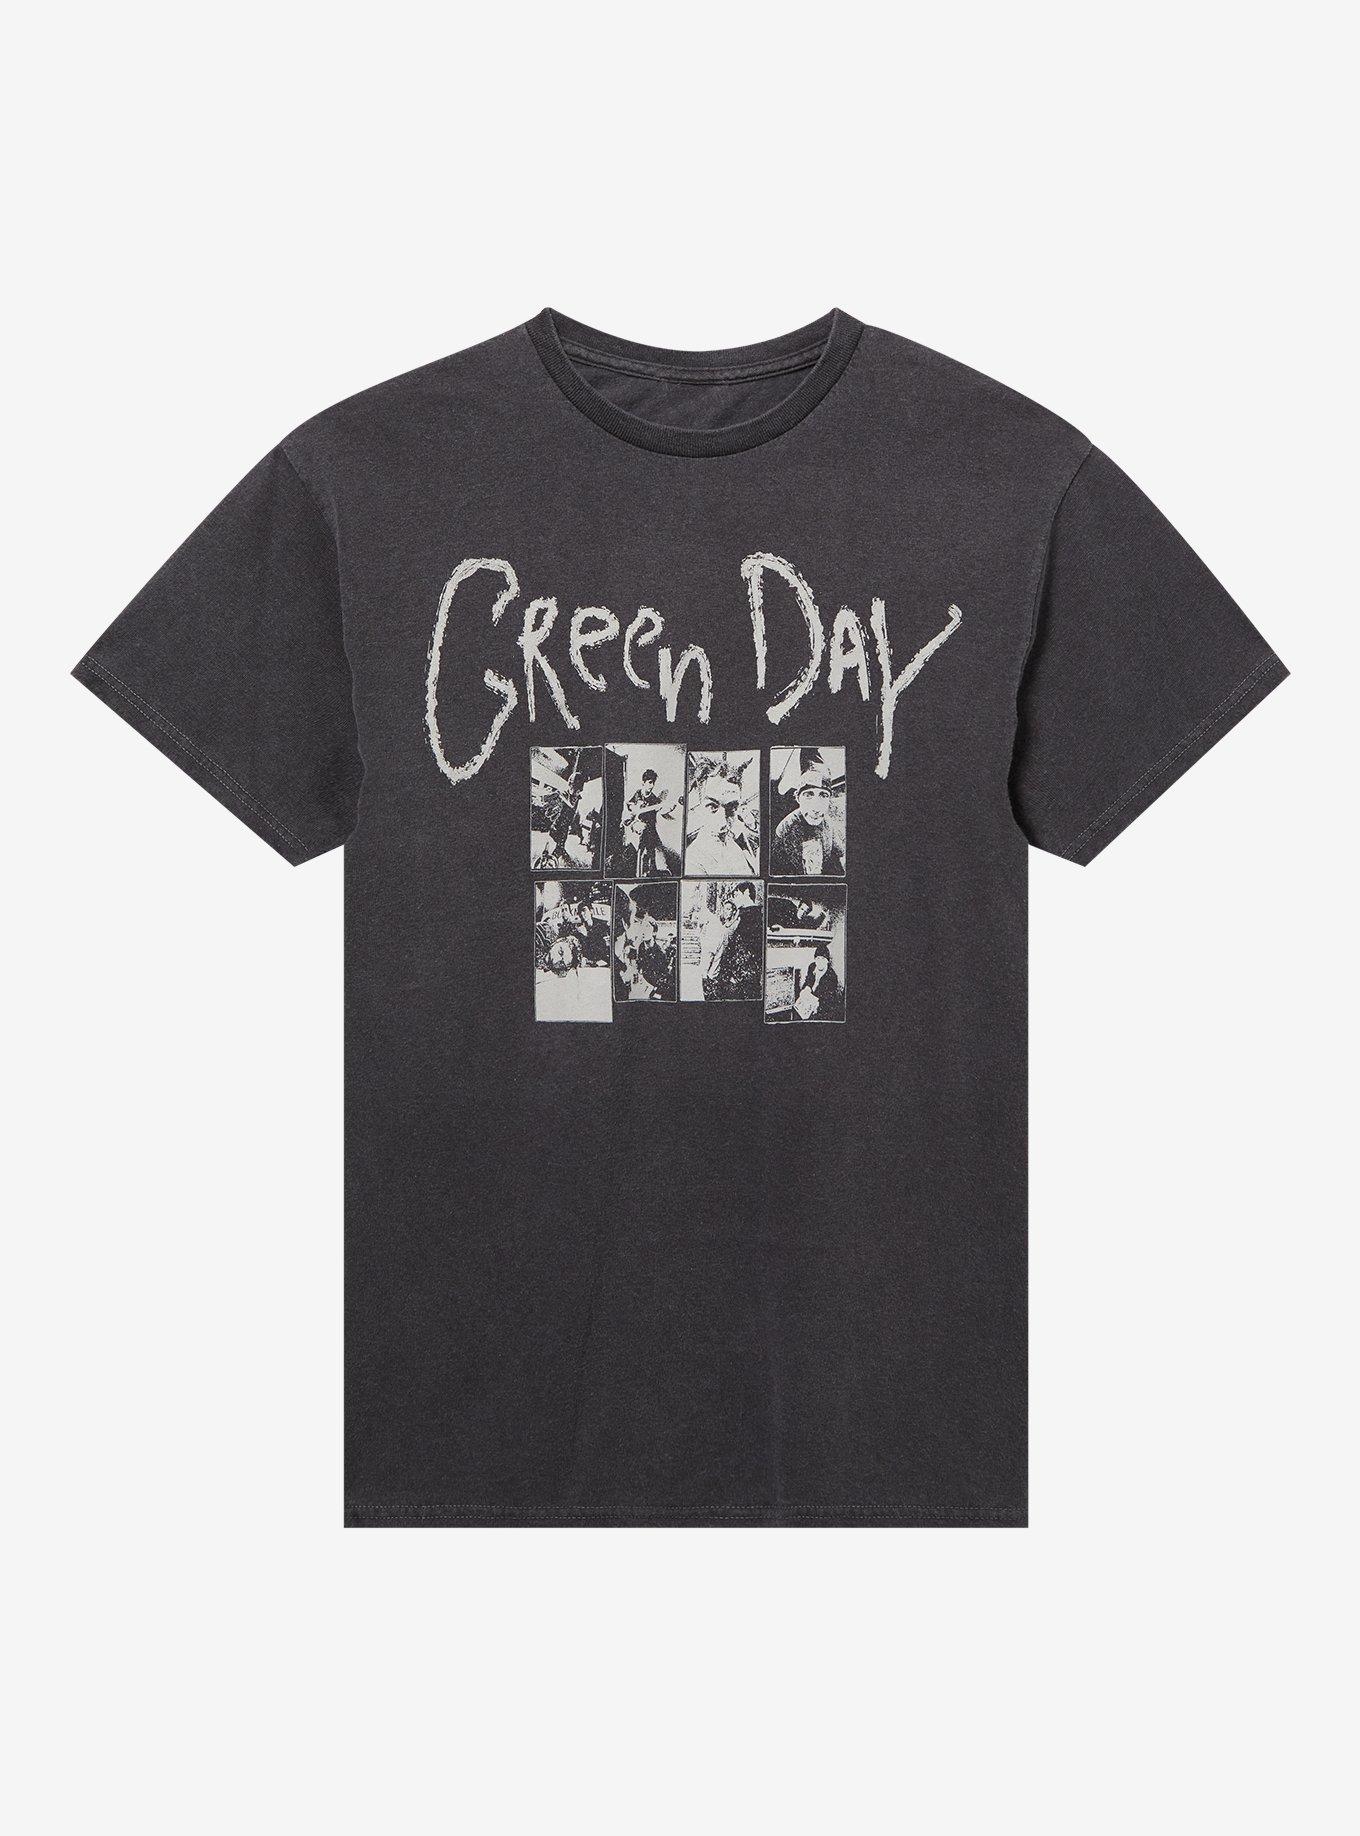 Green Day Photo Collage Washed Boyfriend Fit Girls T-Shirt, BLACK, hi-res